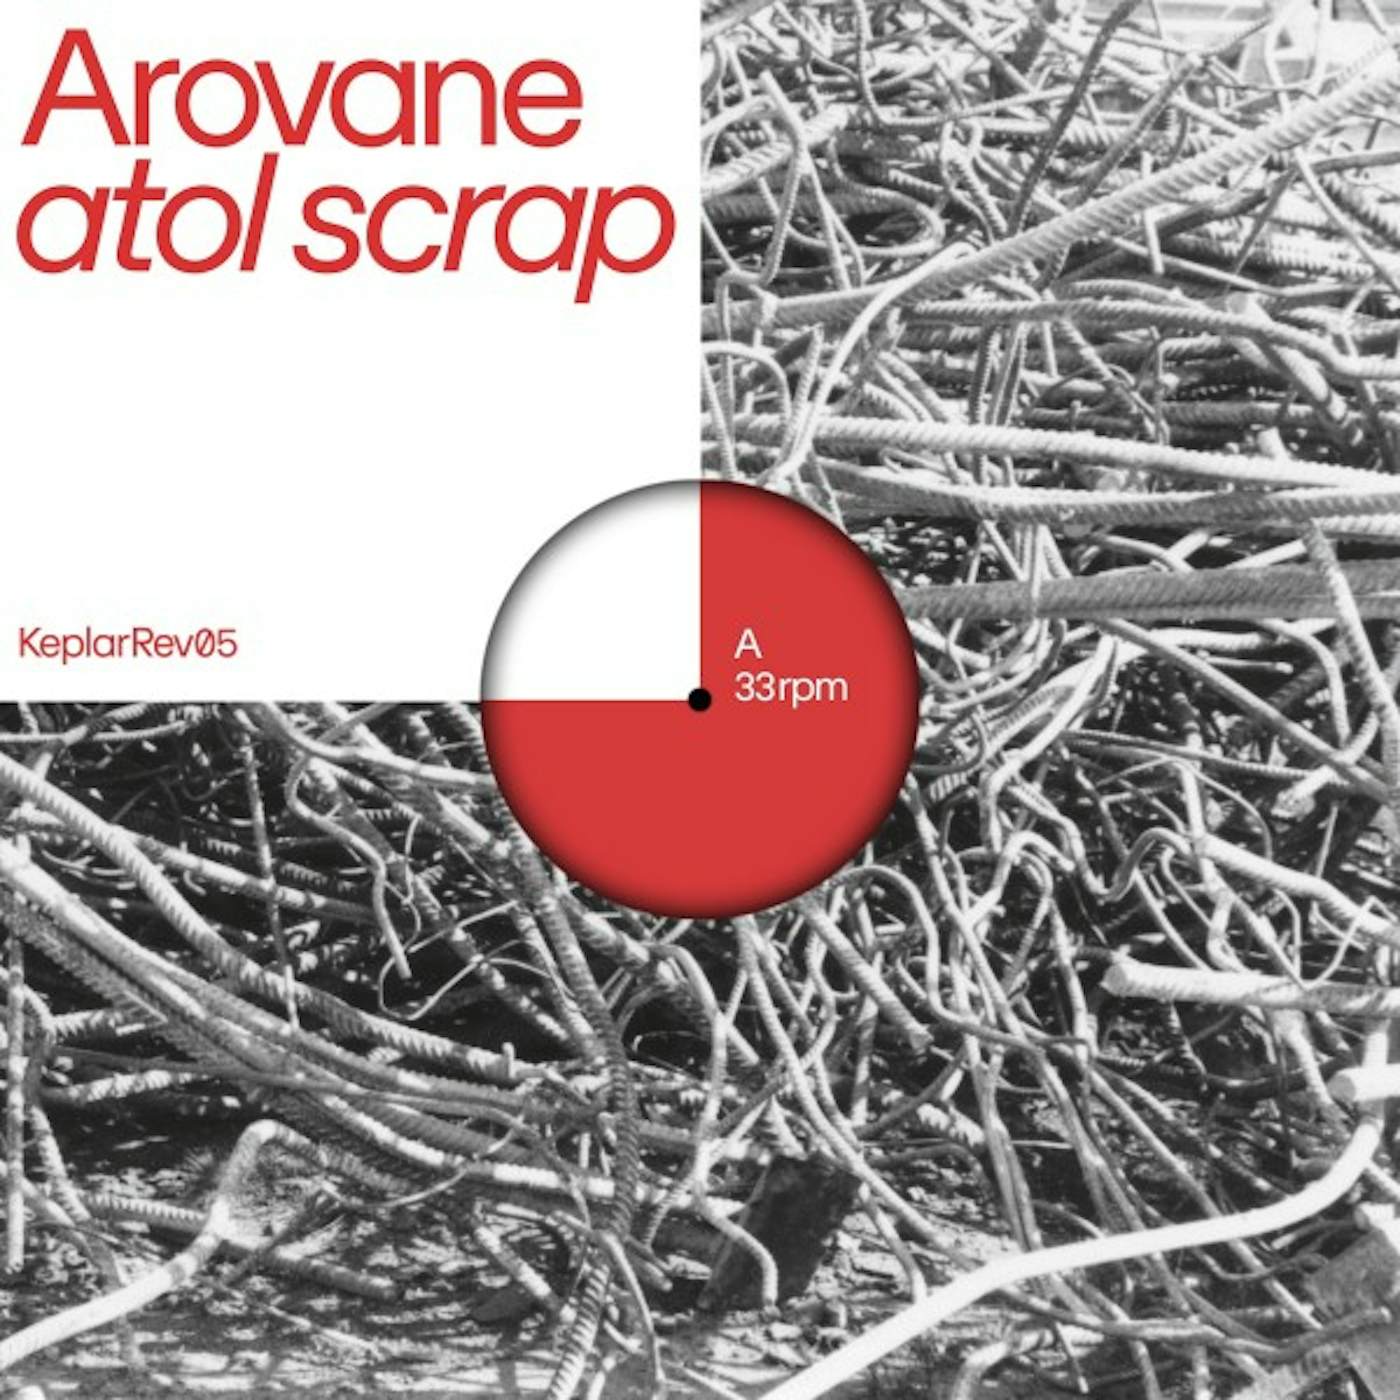 Arovane ATOL SCRAP (2021) Vinyl Record